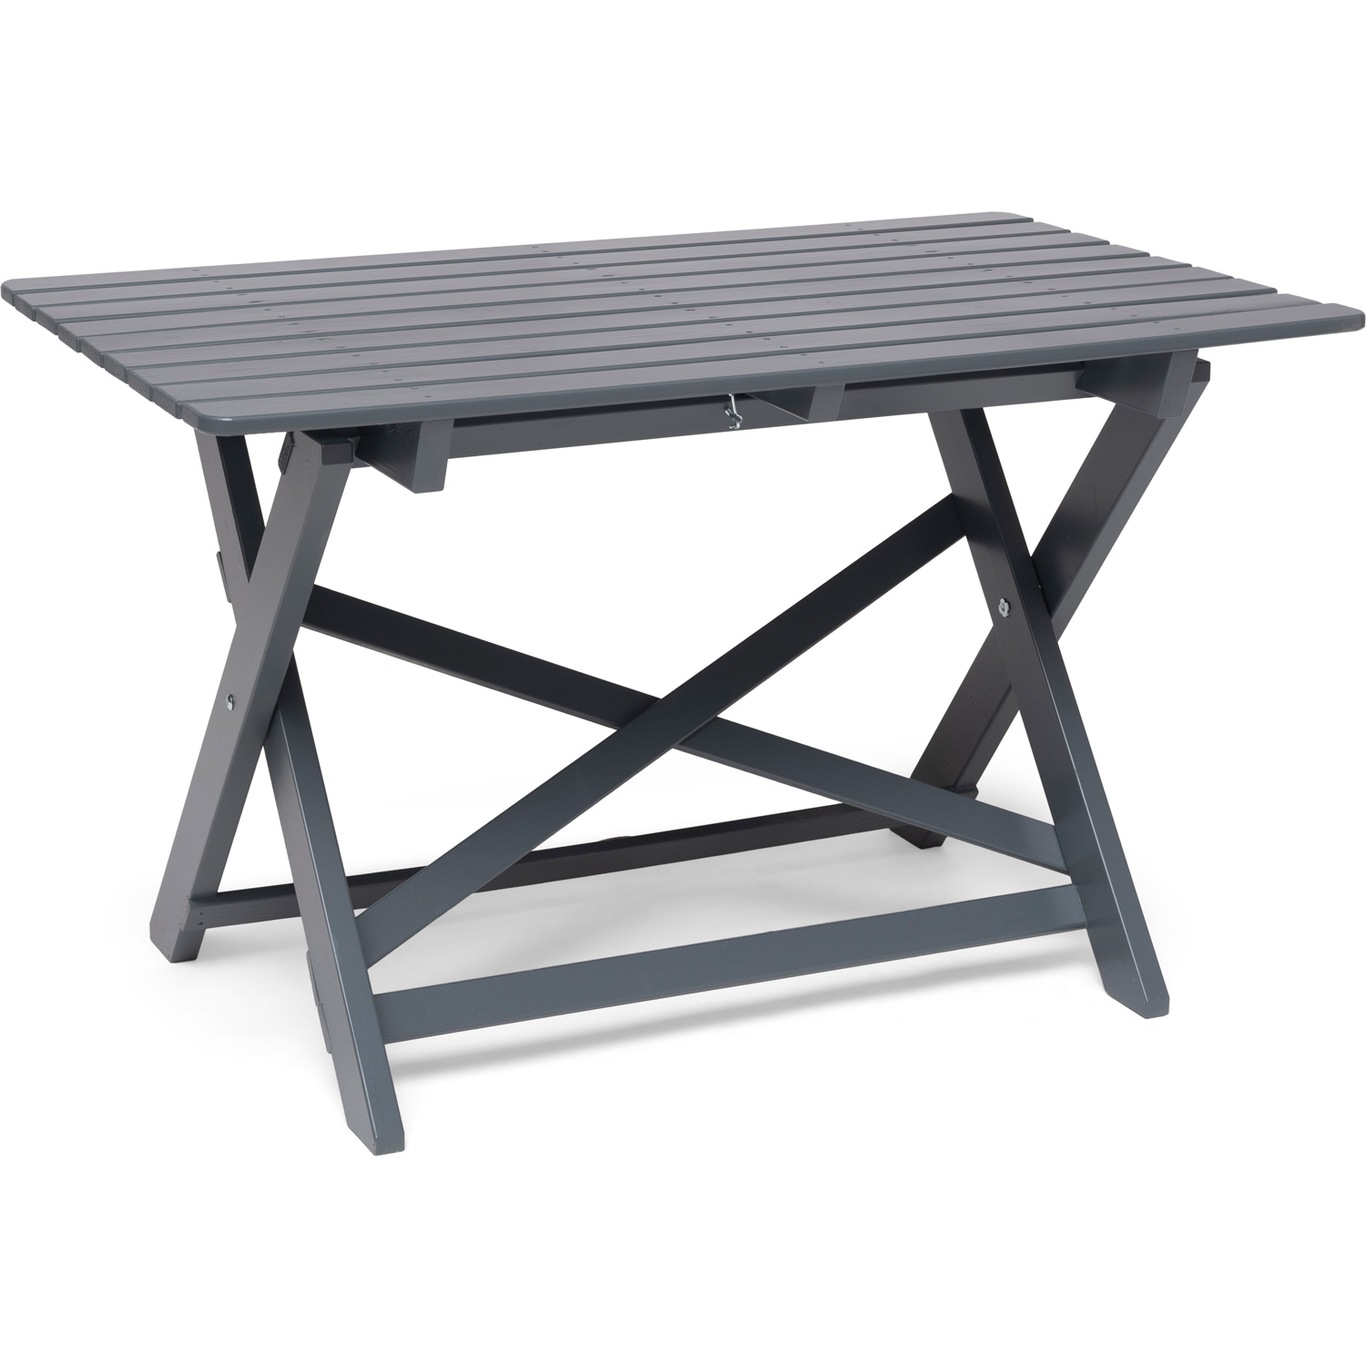 Torpet Table 109x67 cm, Steel Gray